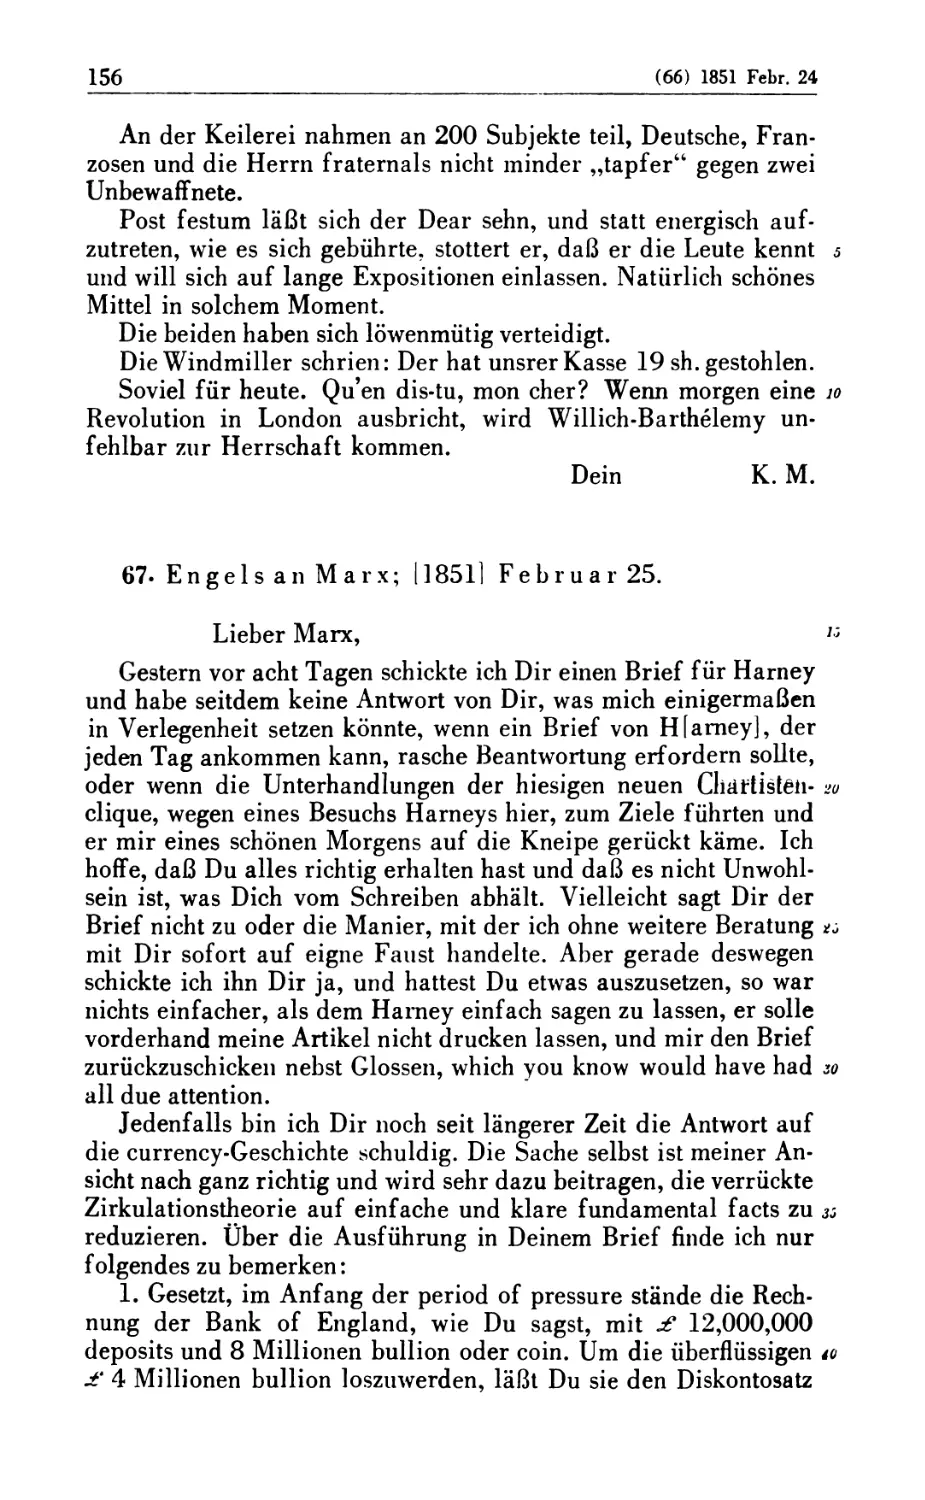 67. Engels an Marx; [1851] Februar 25